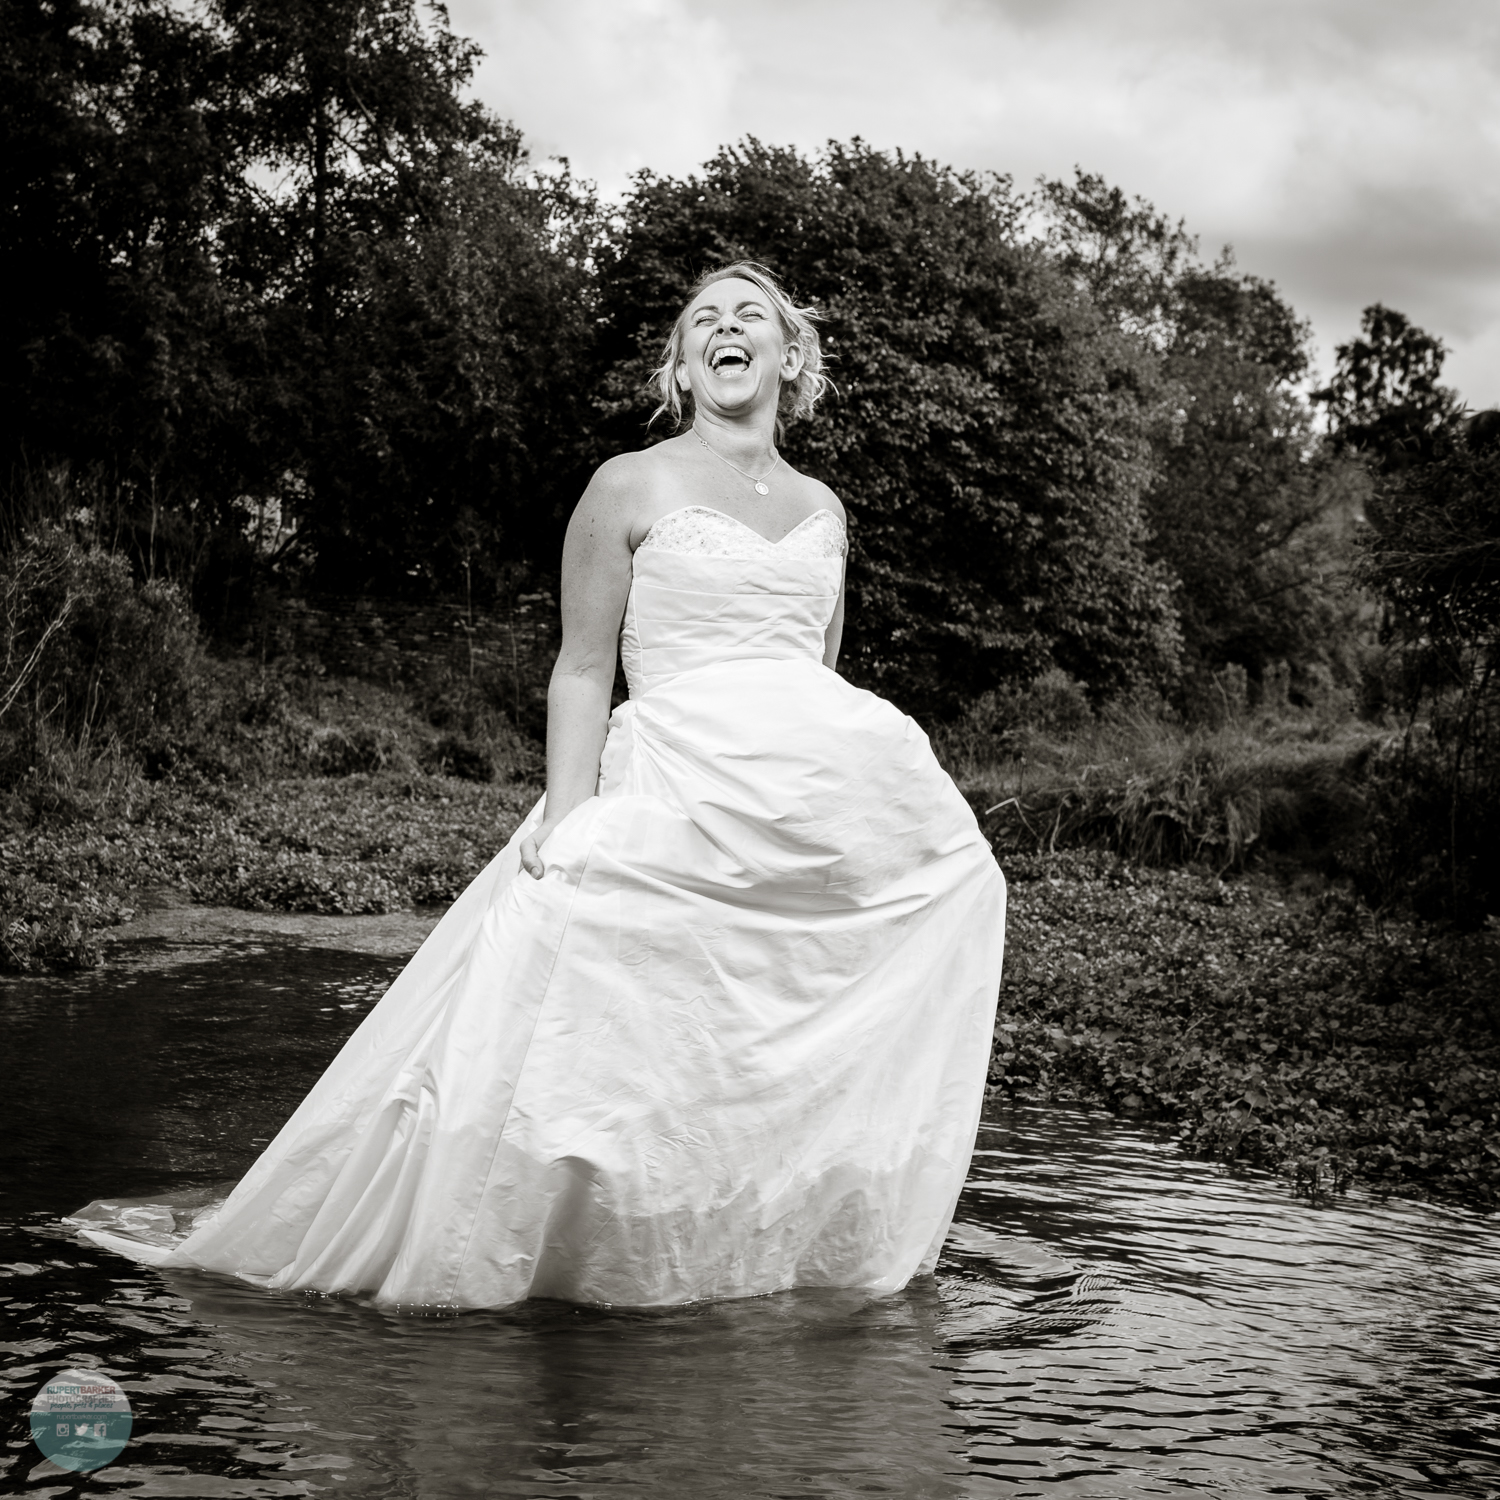 trash the dress river avon malmesbury wedding dress water bombs laughter